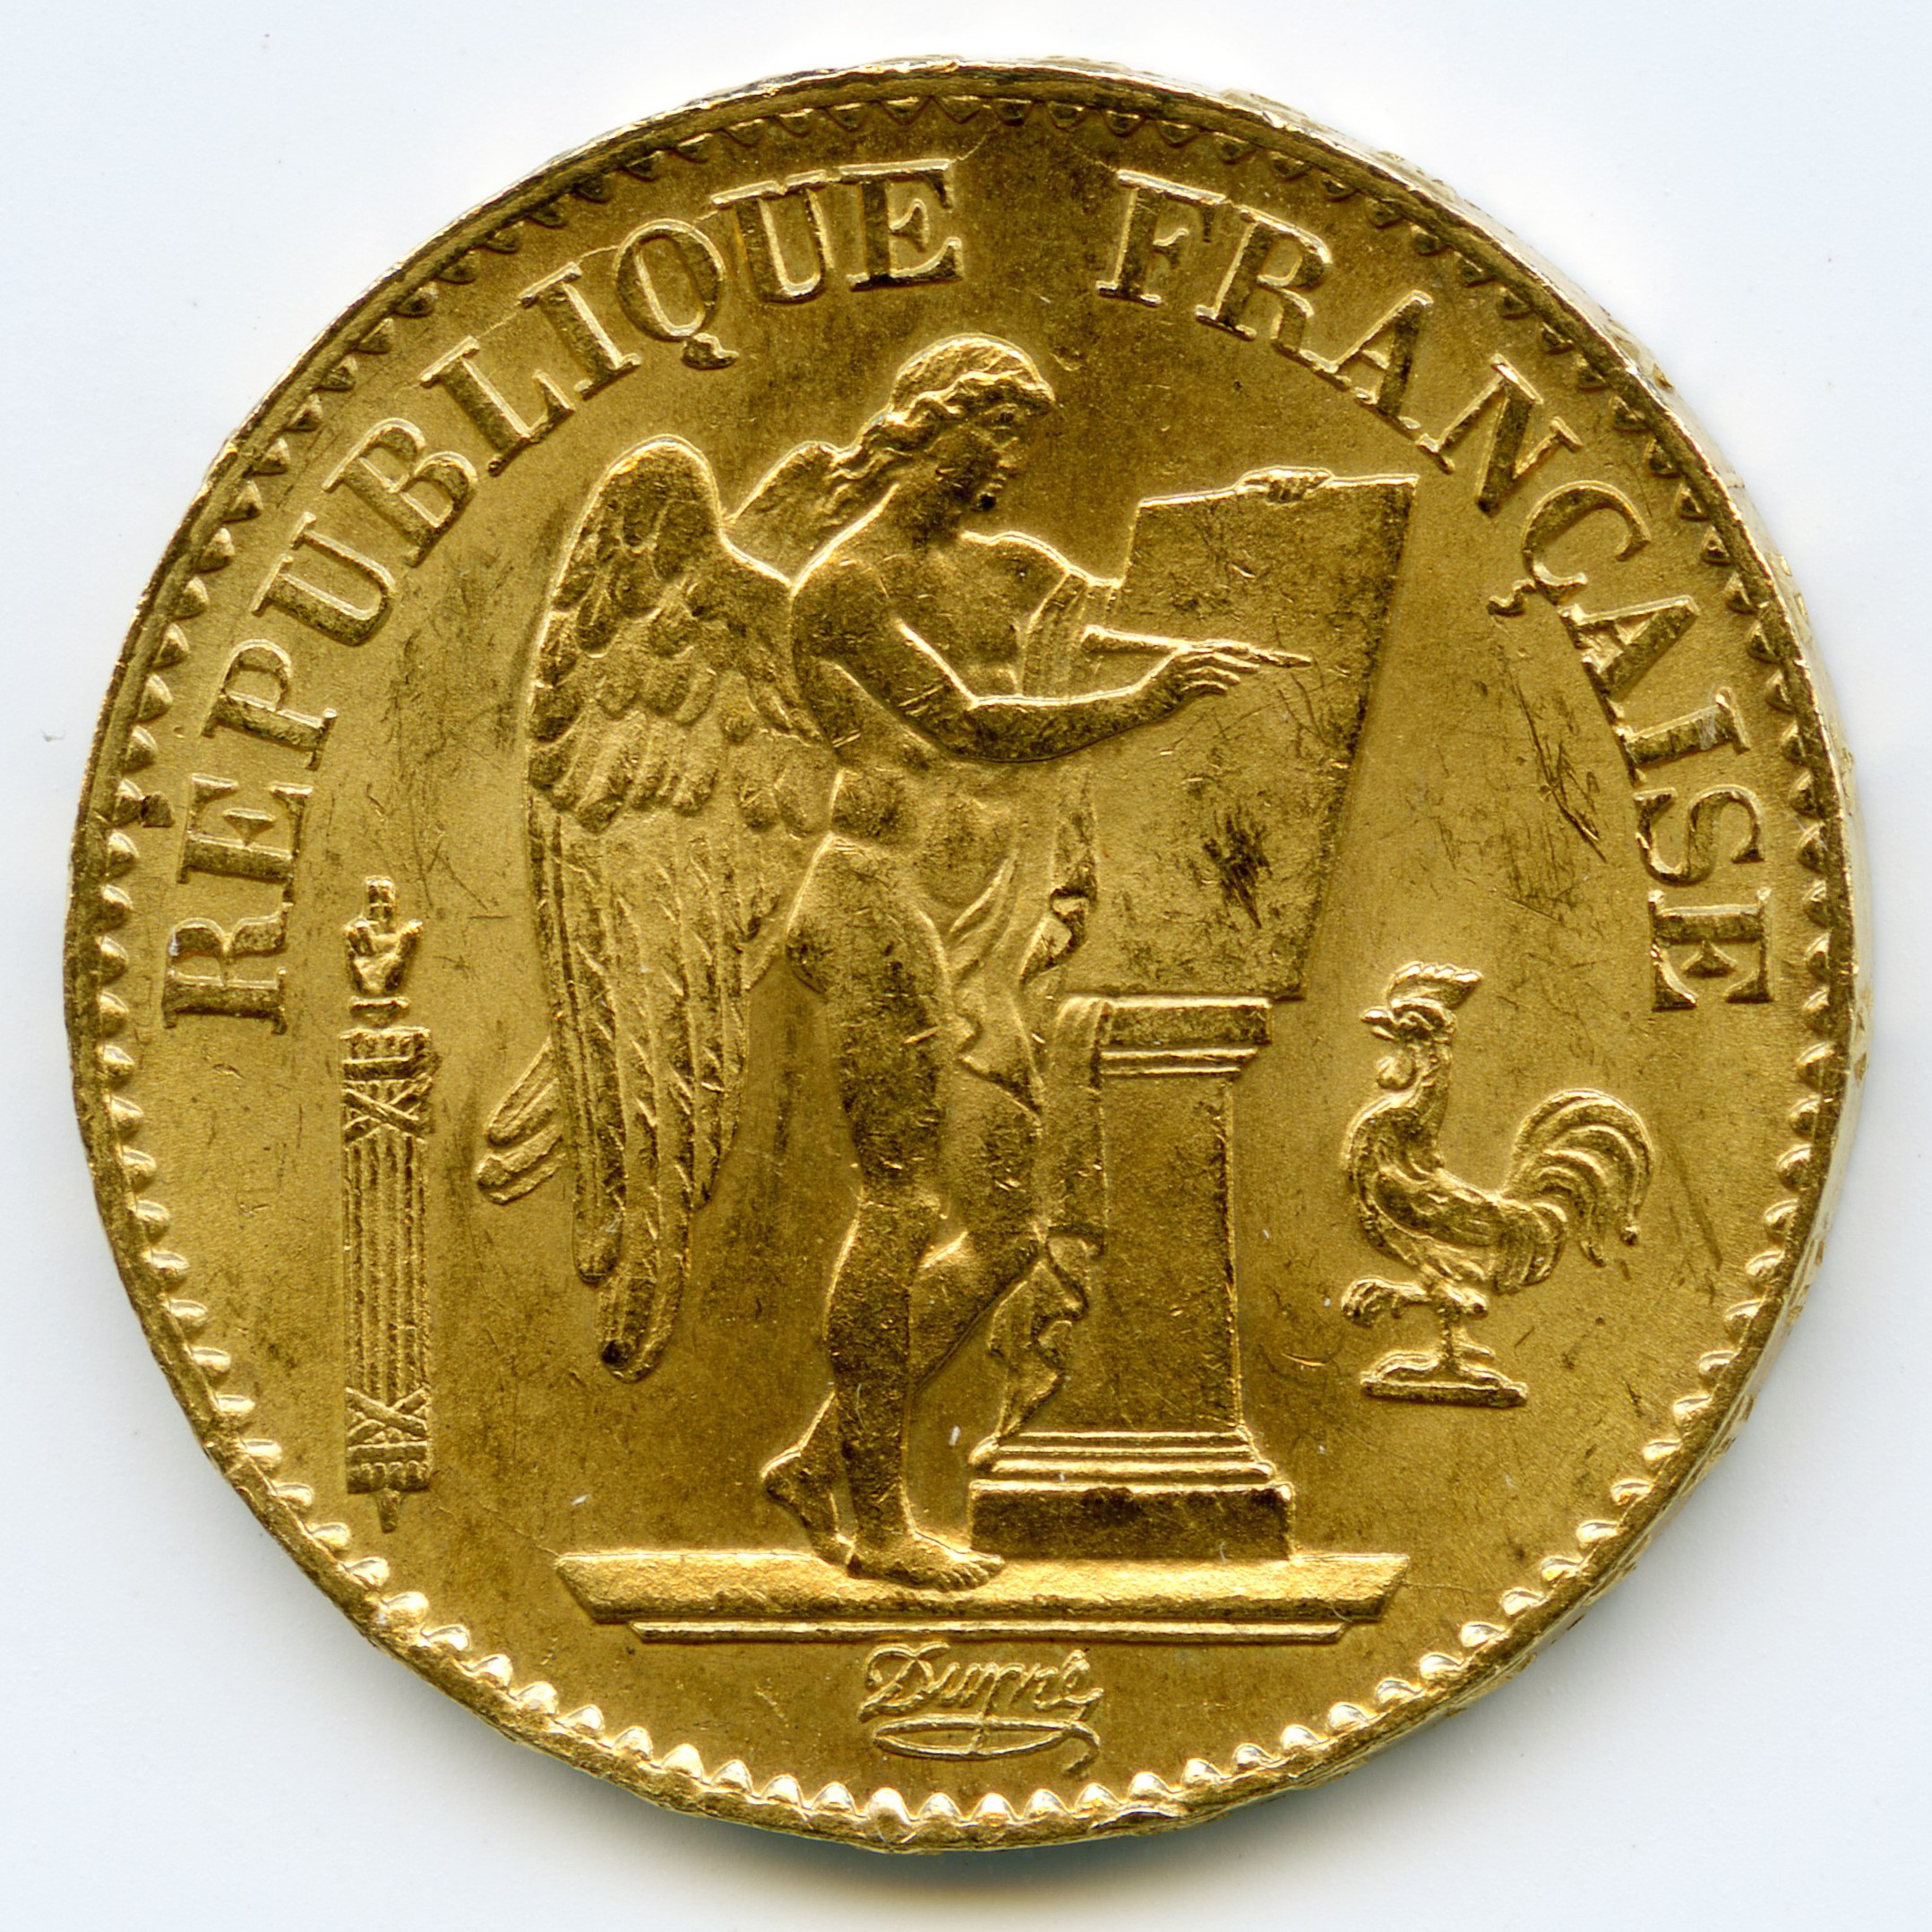 20 Francs - Génie - 1875 A avers